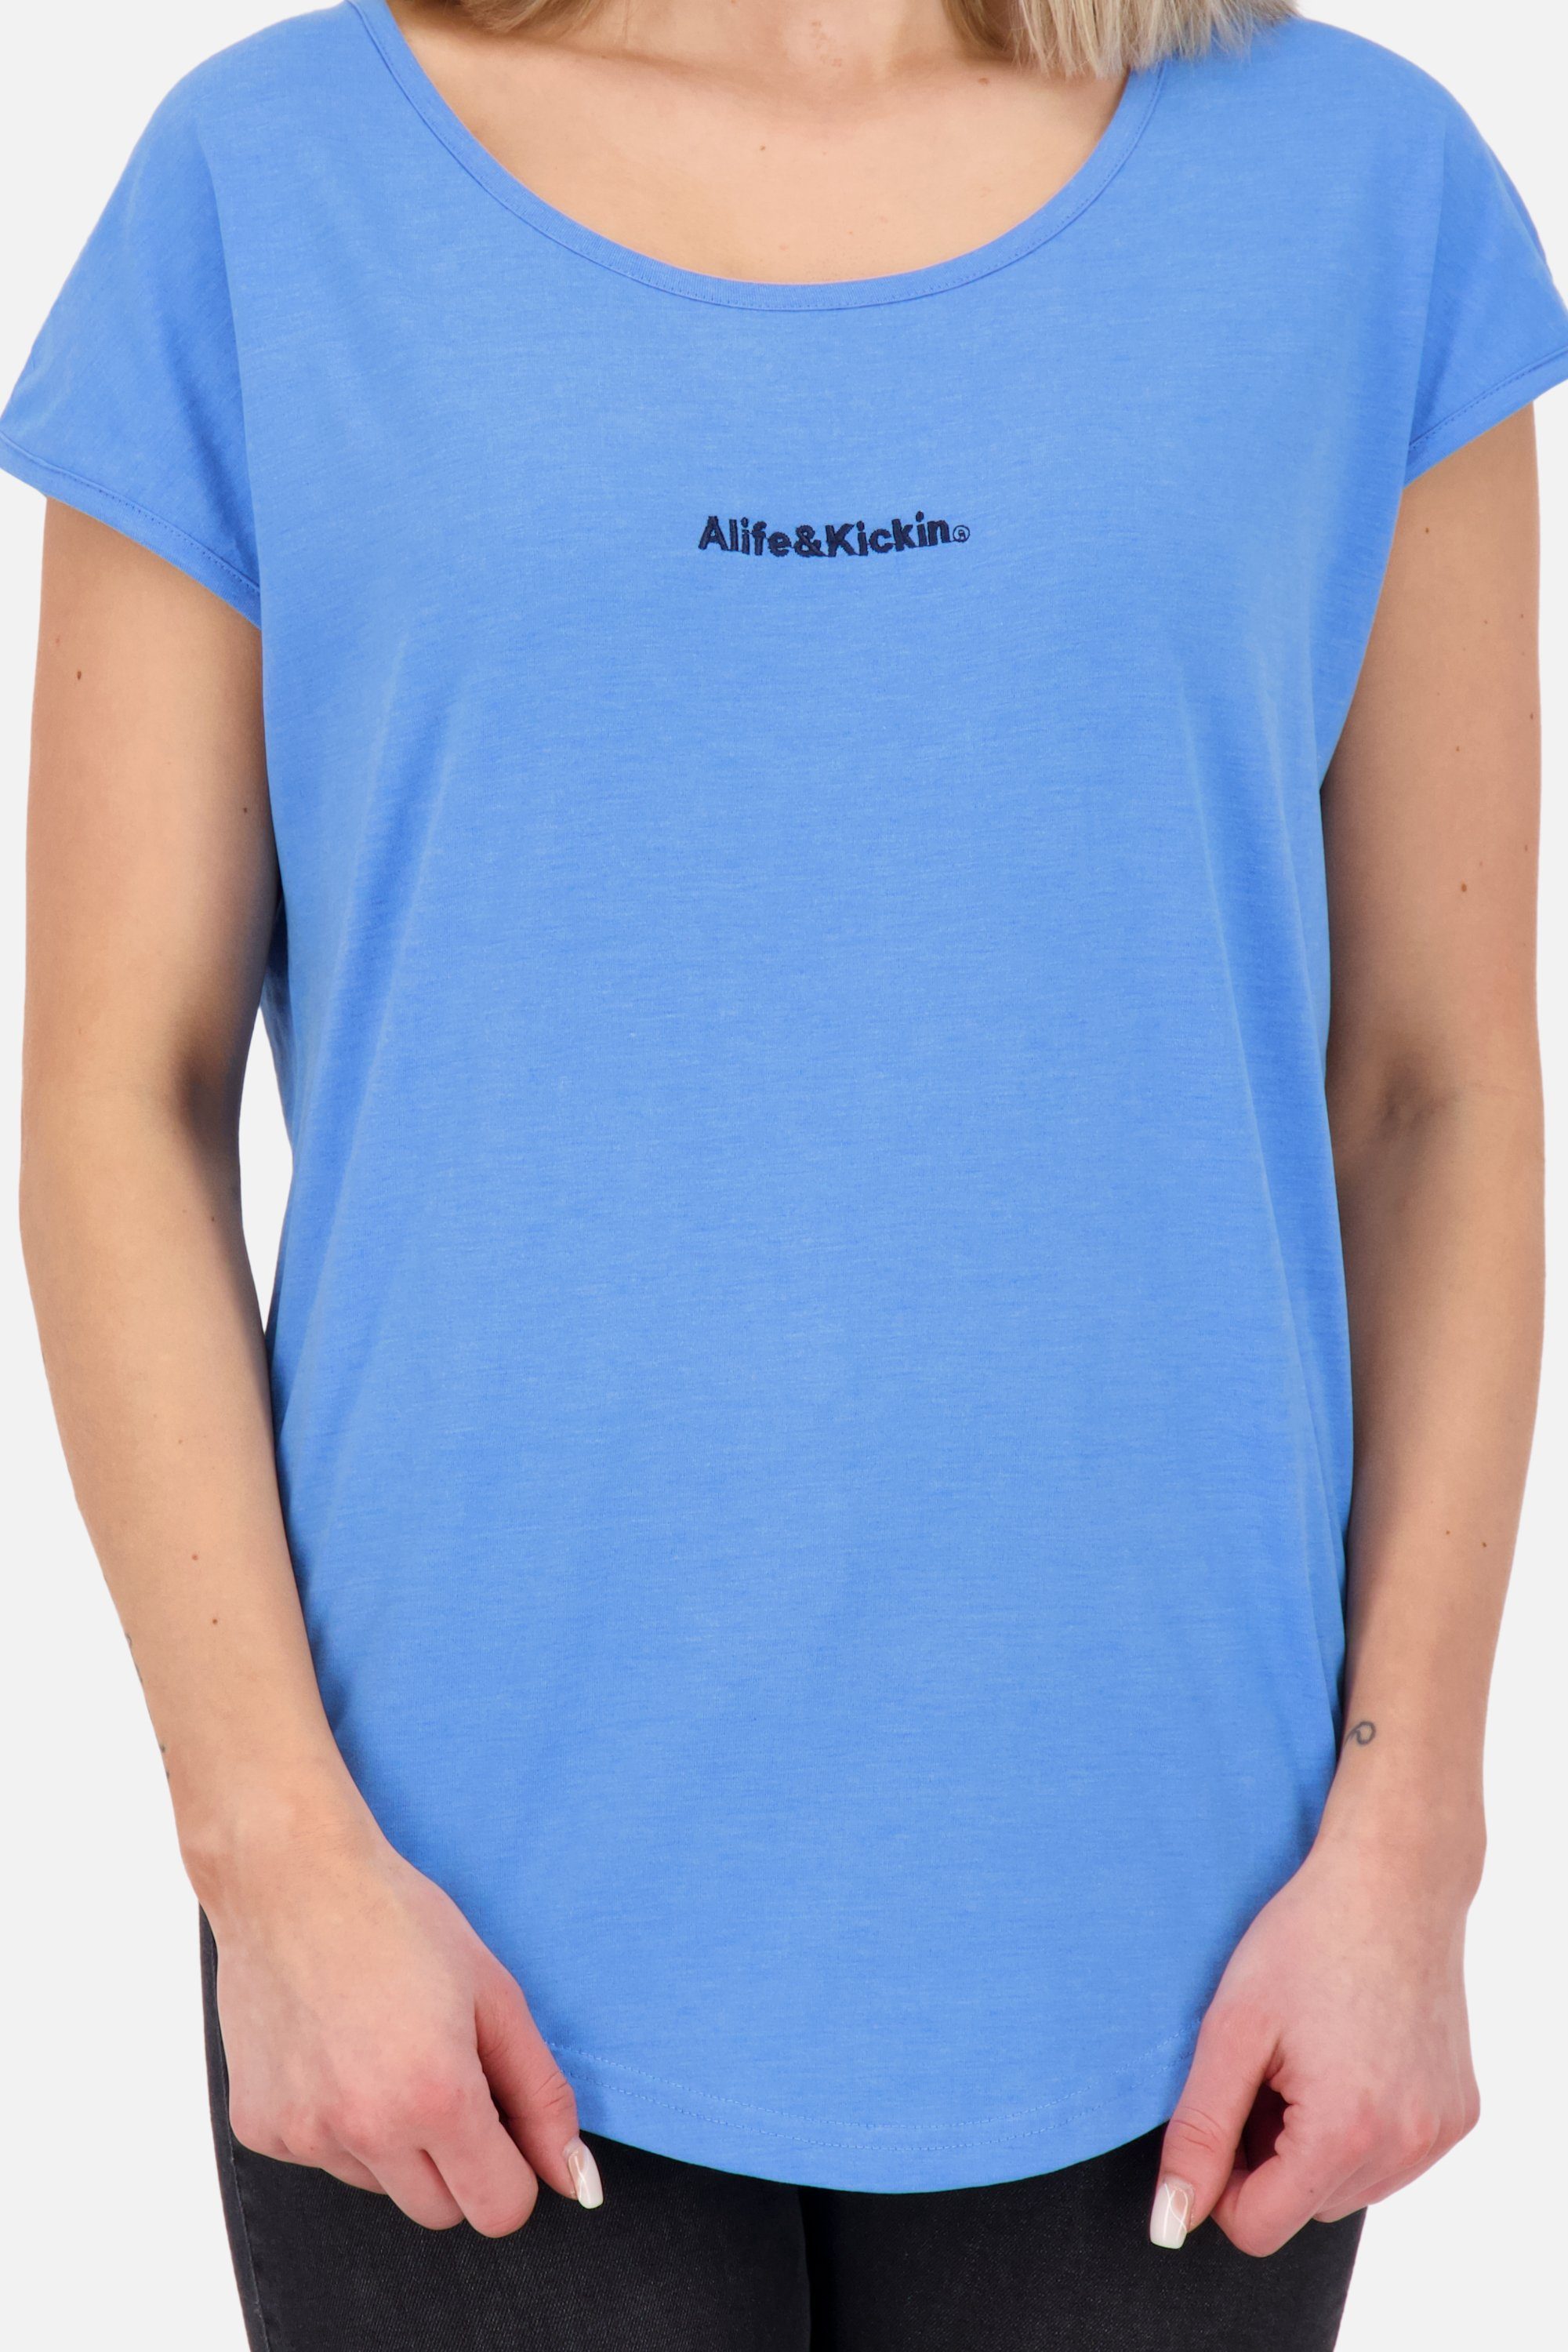 Kickin Damen ALIFE & E KICKIN Rundhalsshirt AND azure Shirt Alife Kurzarmshirt, Shirt SelinaAK